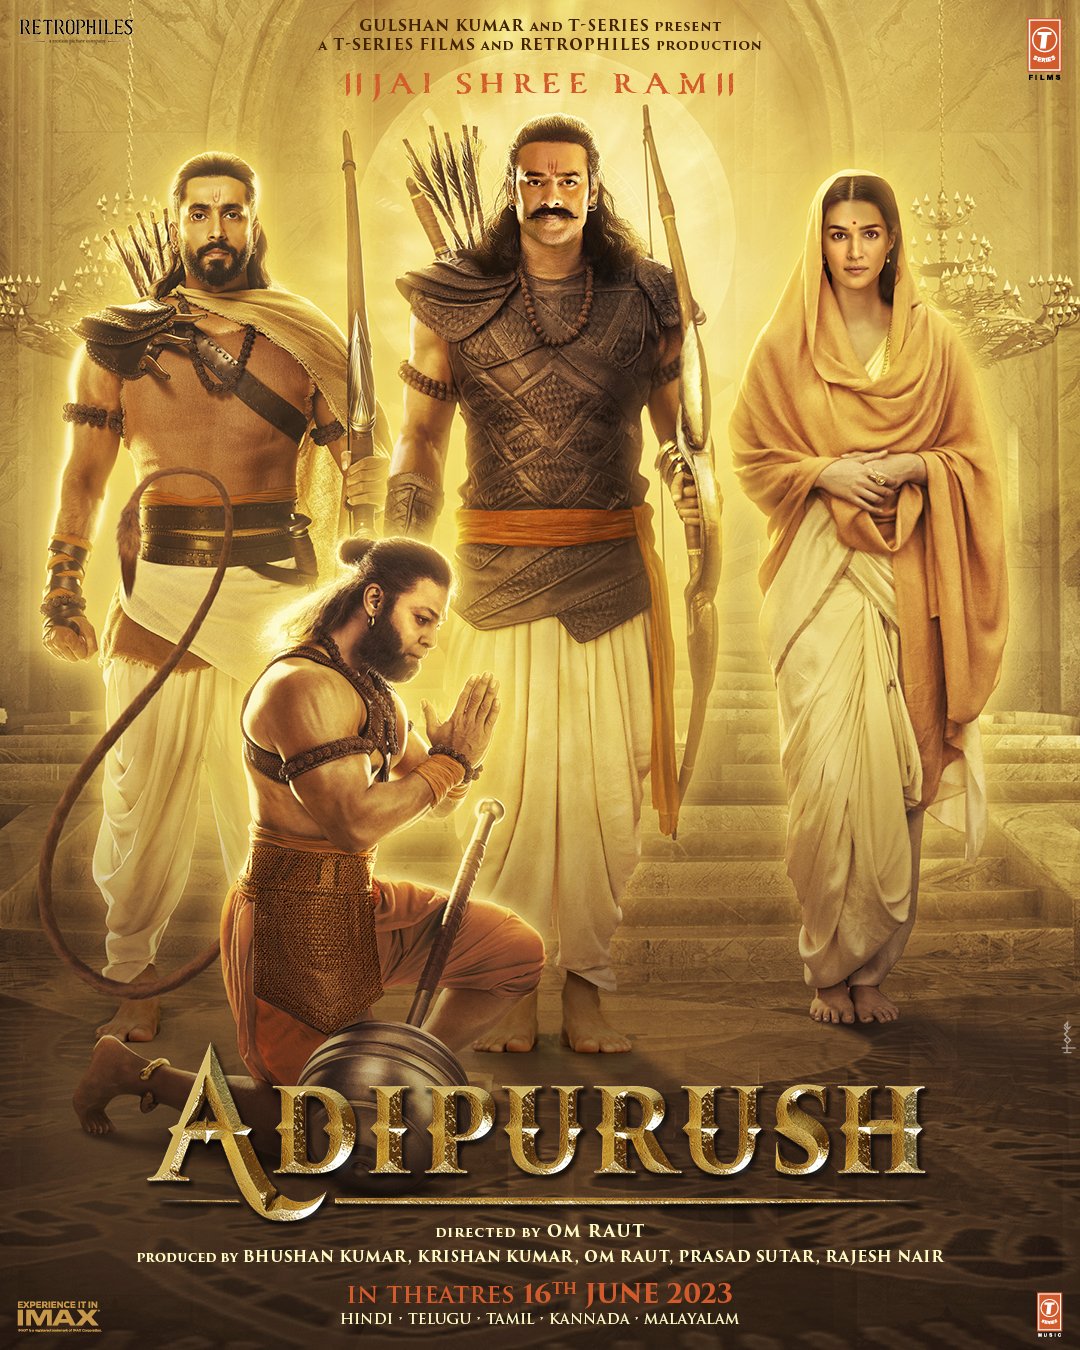 Team ‘Adipurush’ taking a huge gamble with runtime